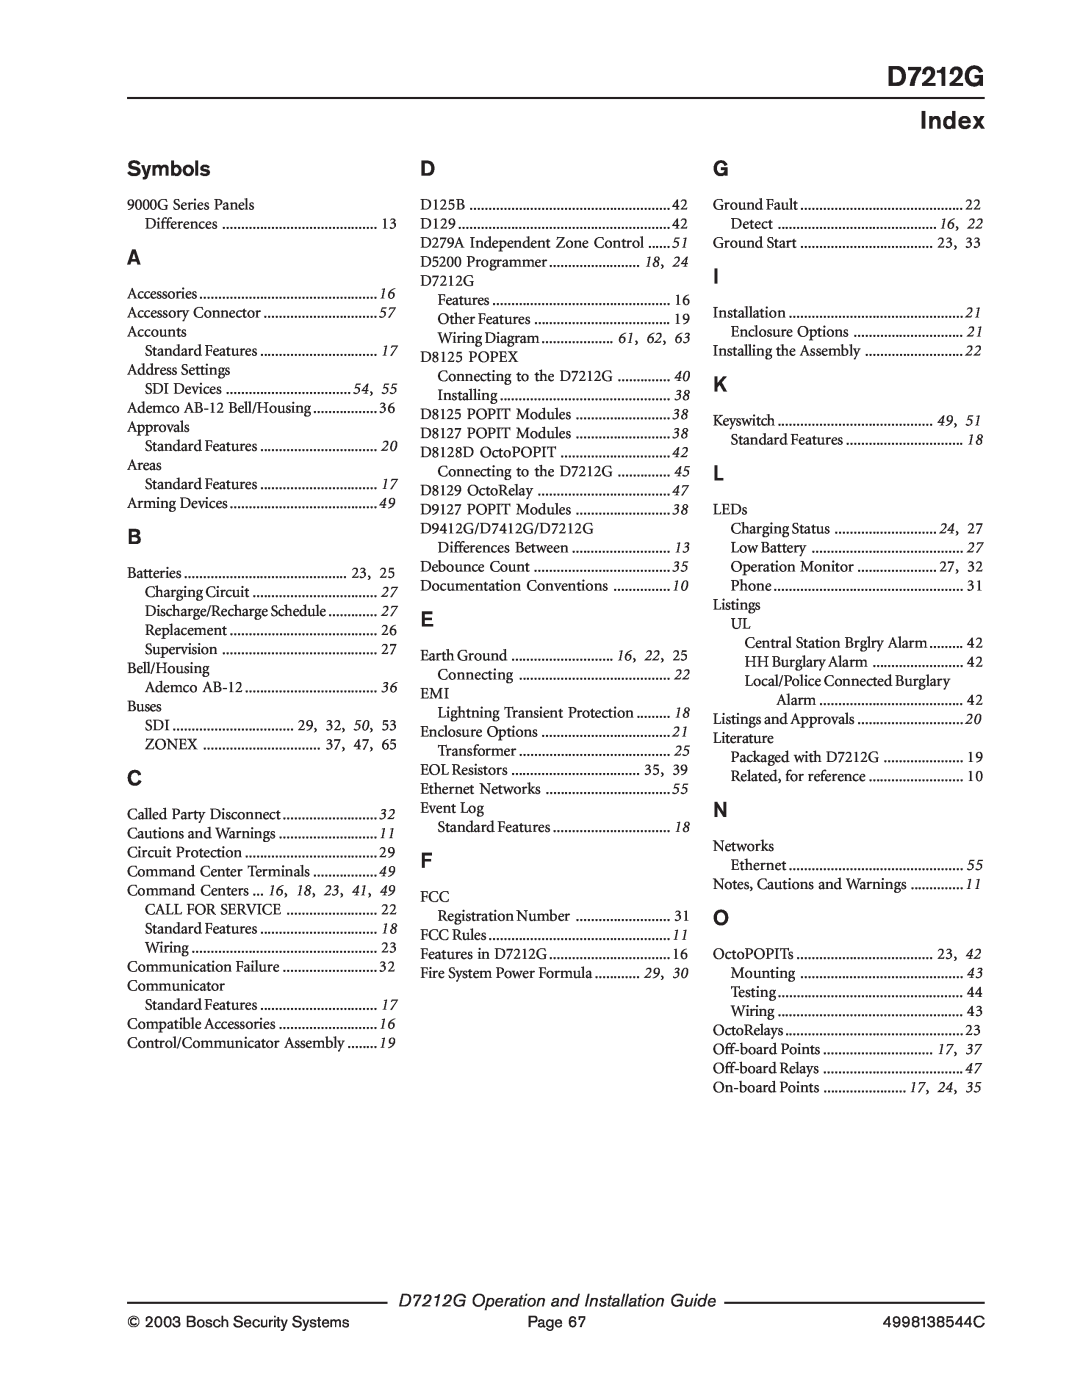 Bosch Appliances D7212G manual Index 